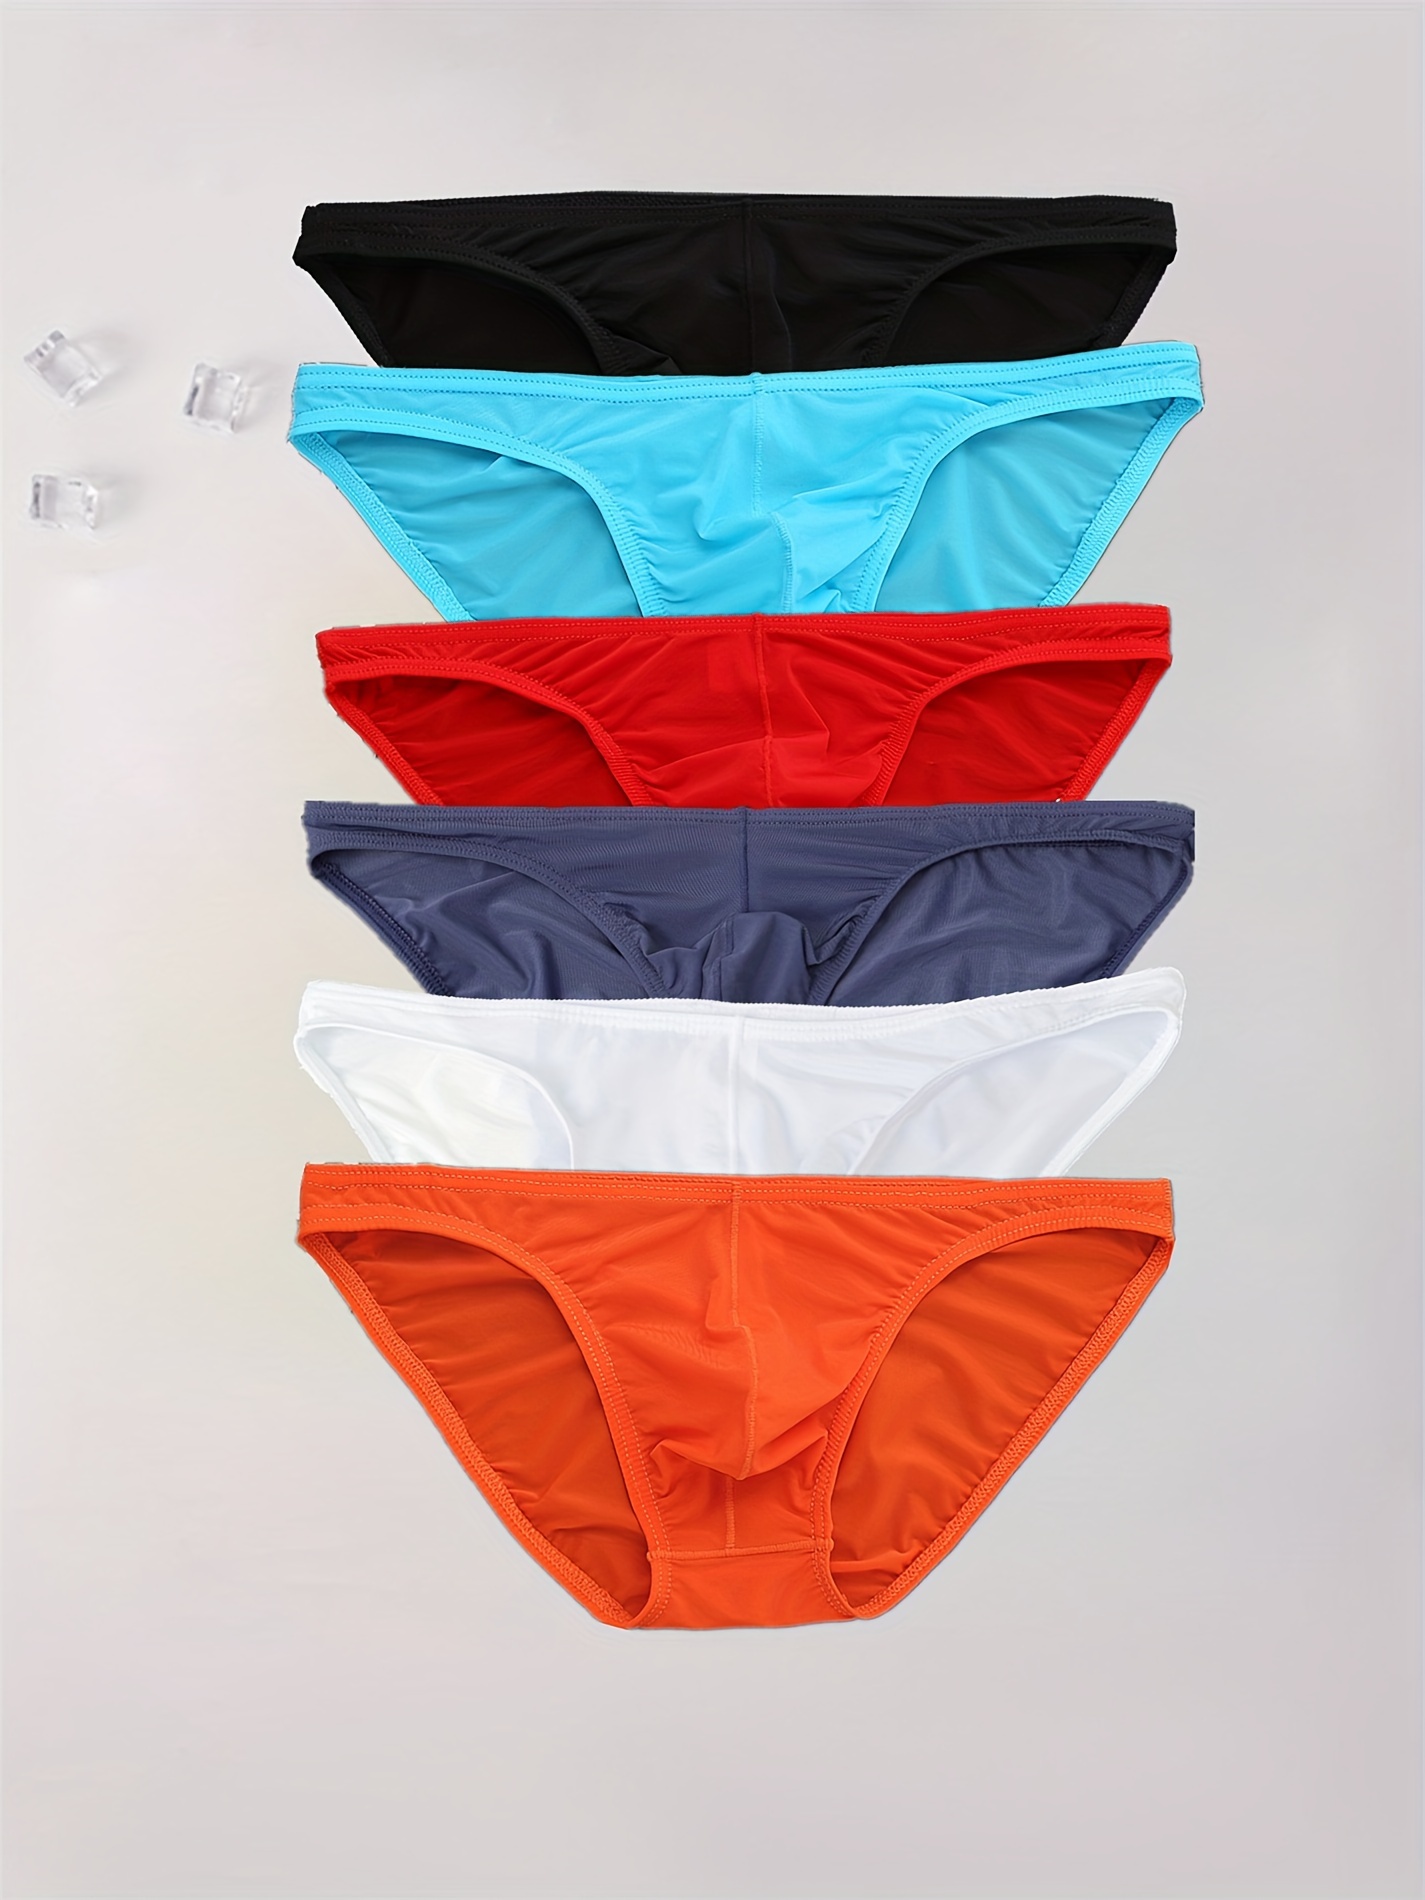 US Seller Mens Sexy Printed Cotton Tong Underwear Low Rise Bikini